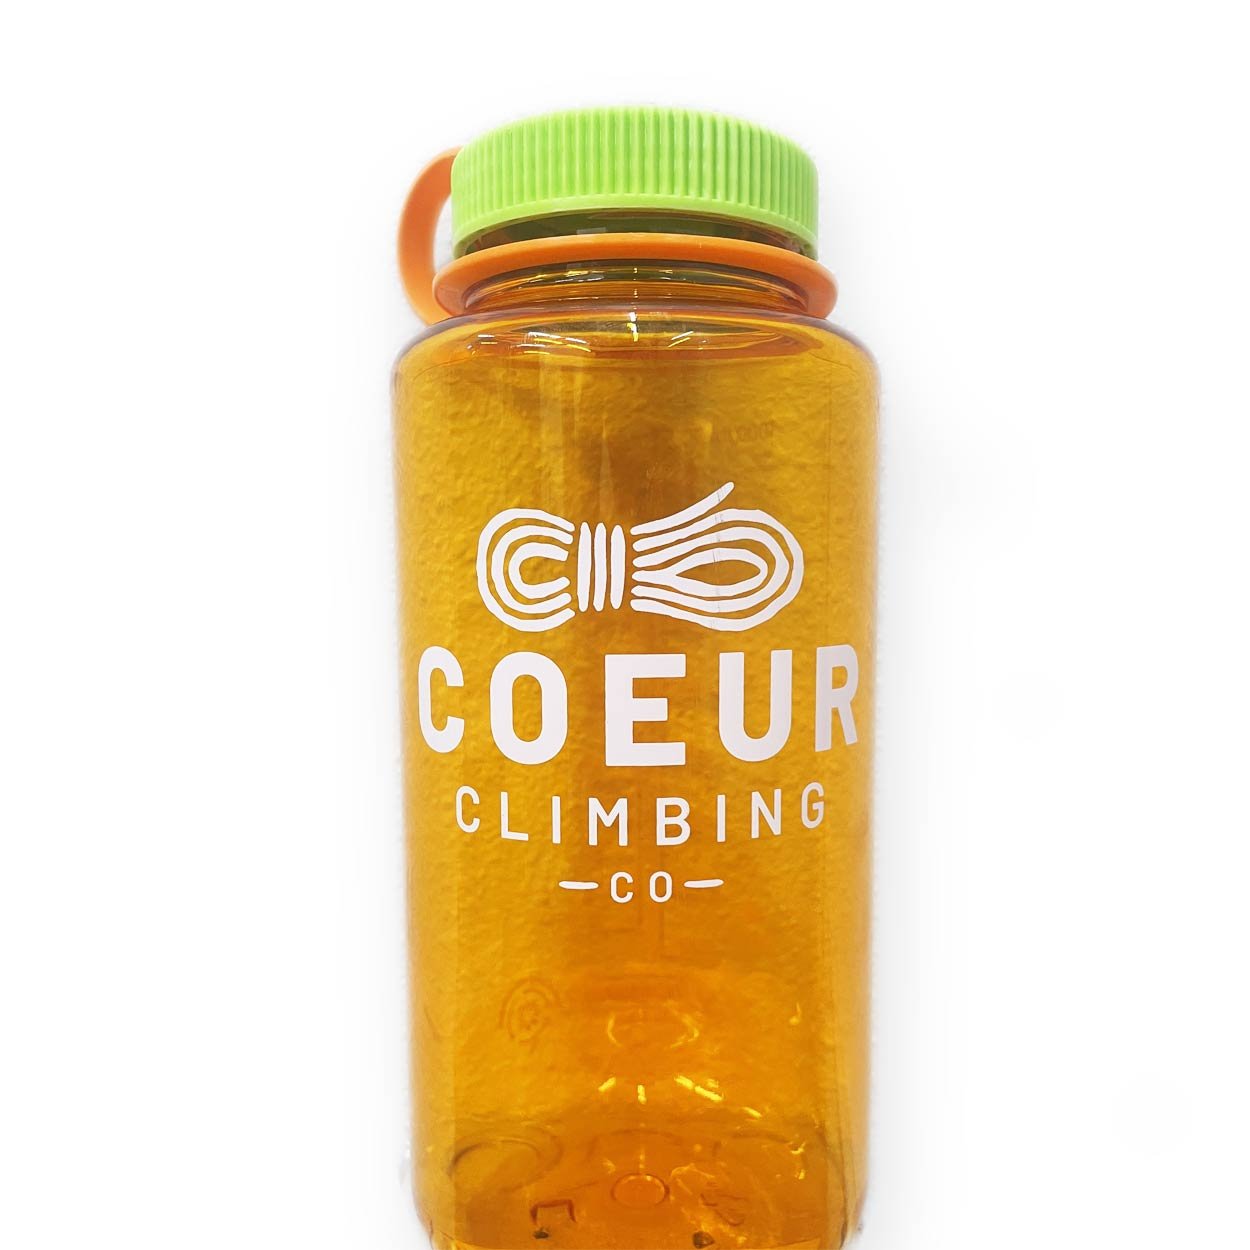 clementine-32oz-nalgene-water-bottle-with-coeur-climbing-logo.jpg